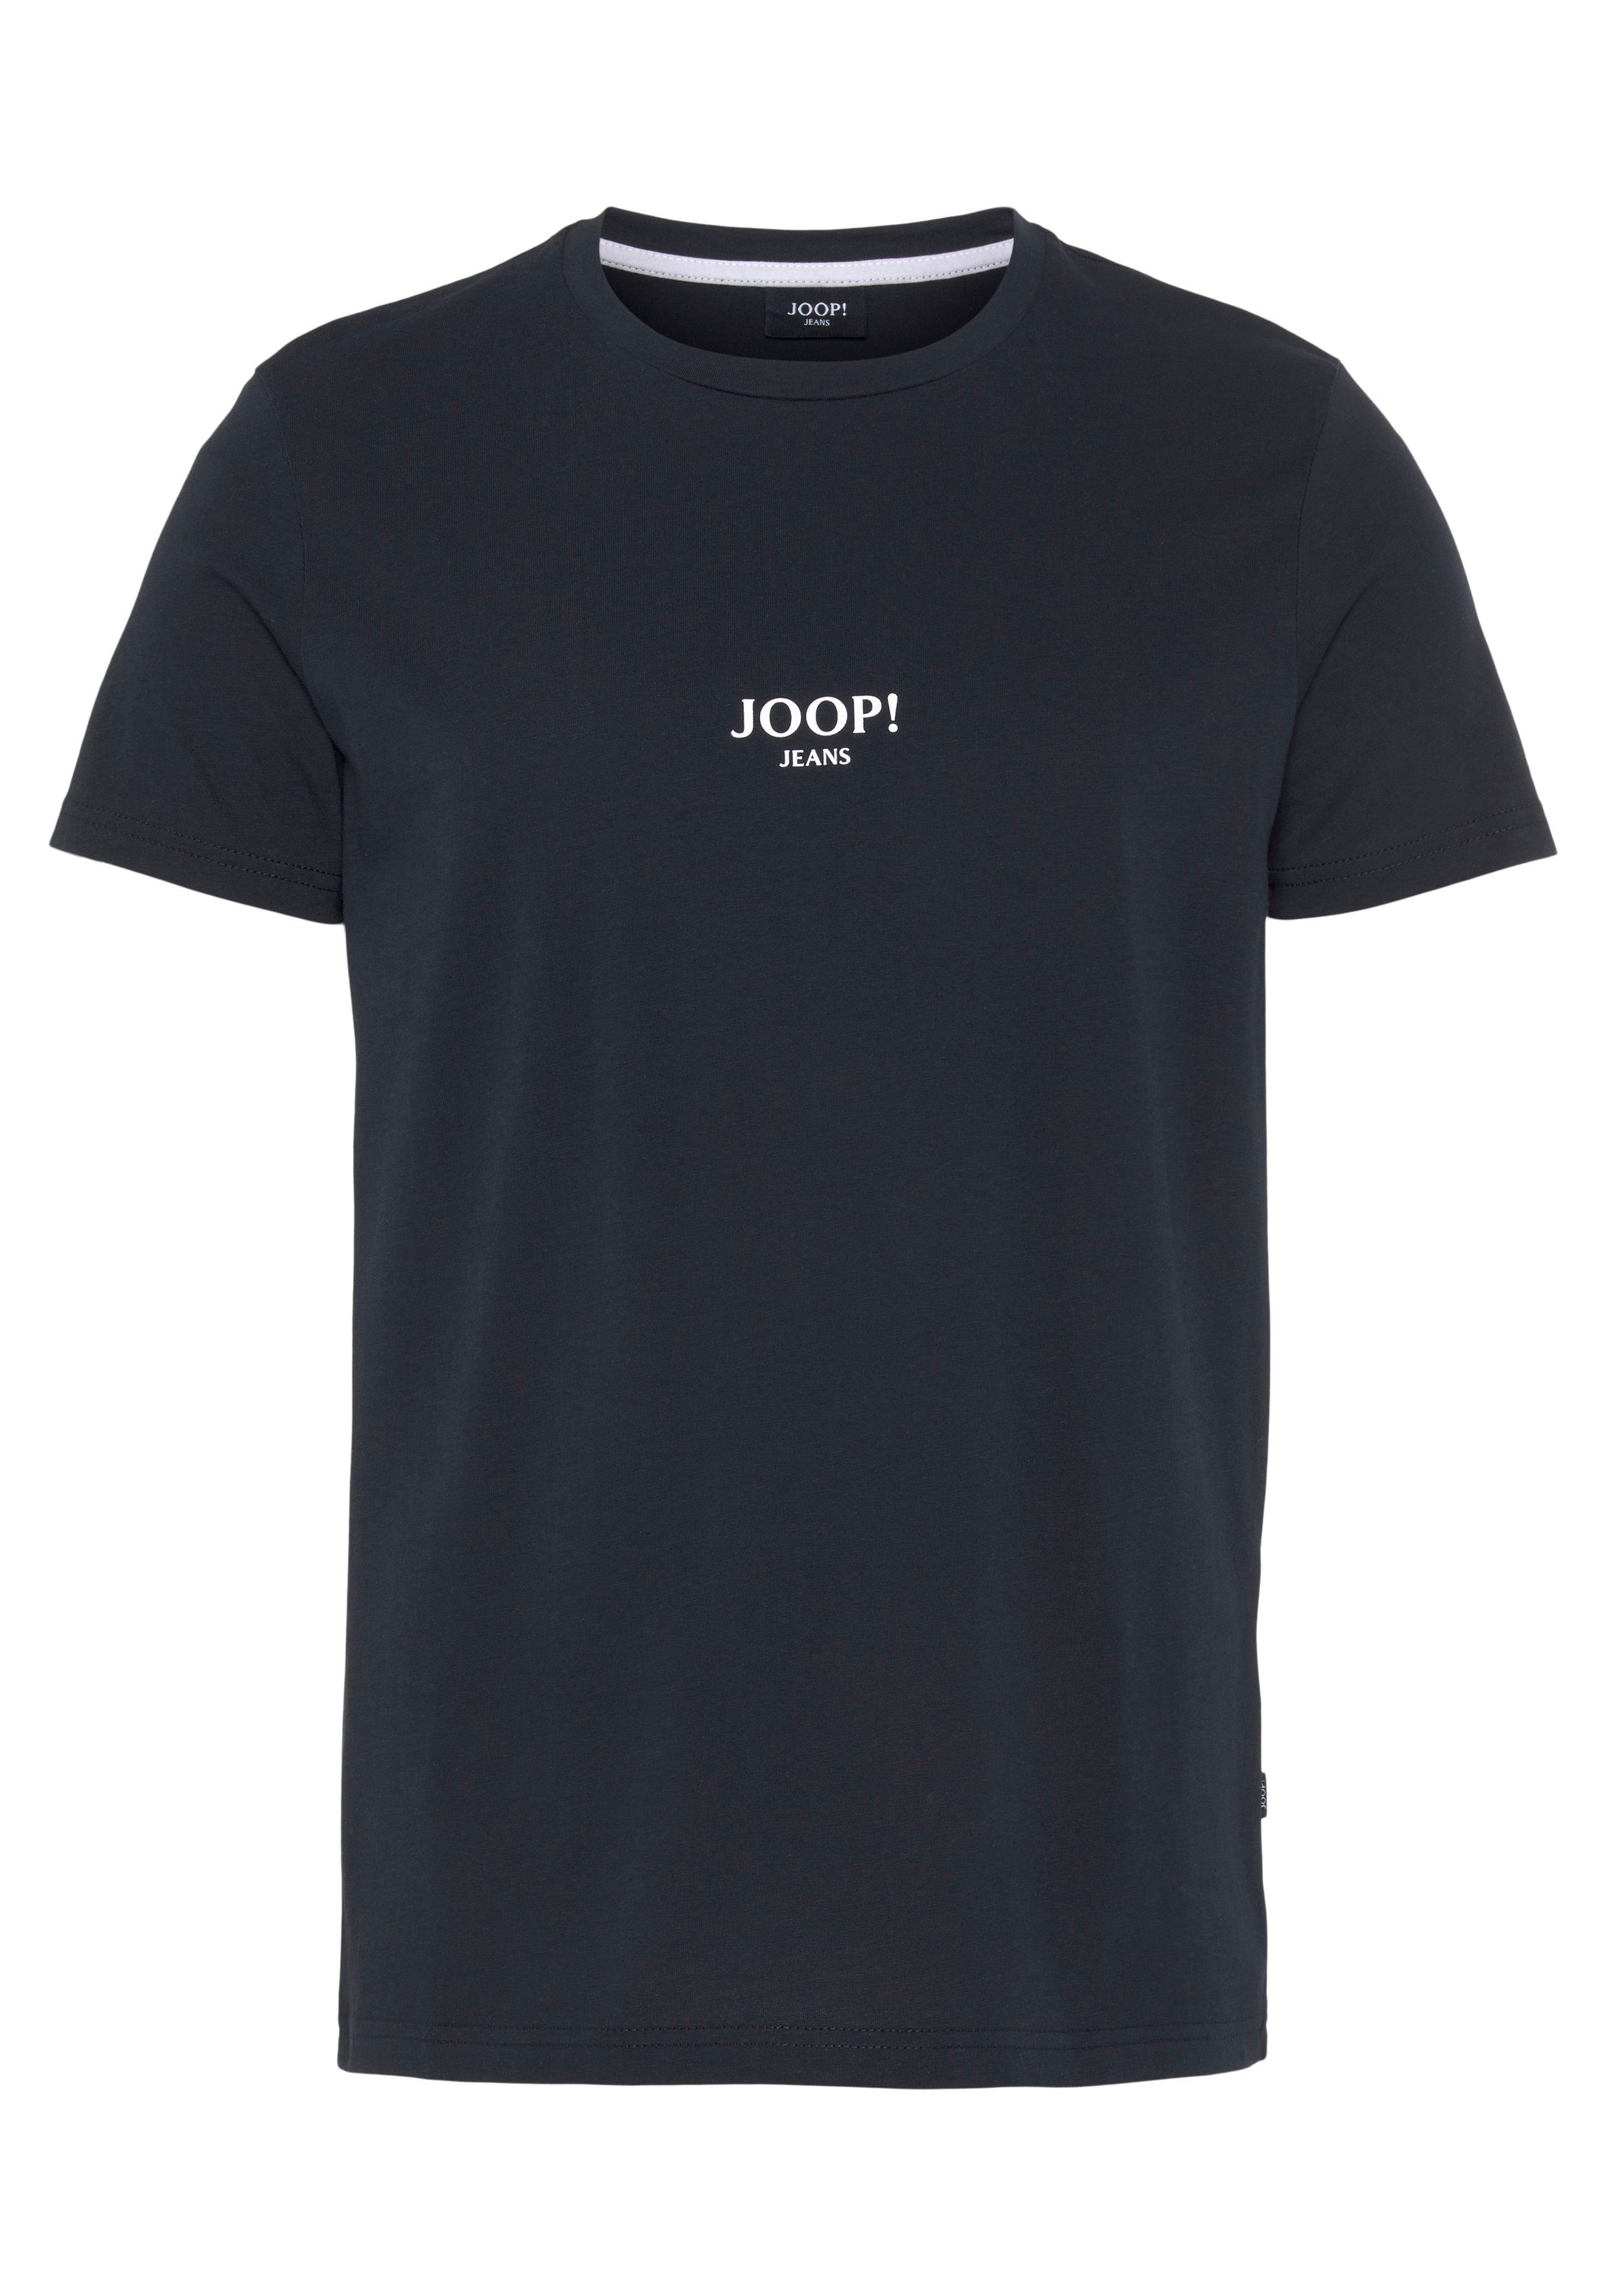 Joop Jeans T-Shirt mit Logodruck marine